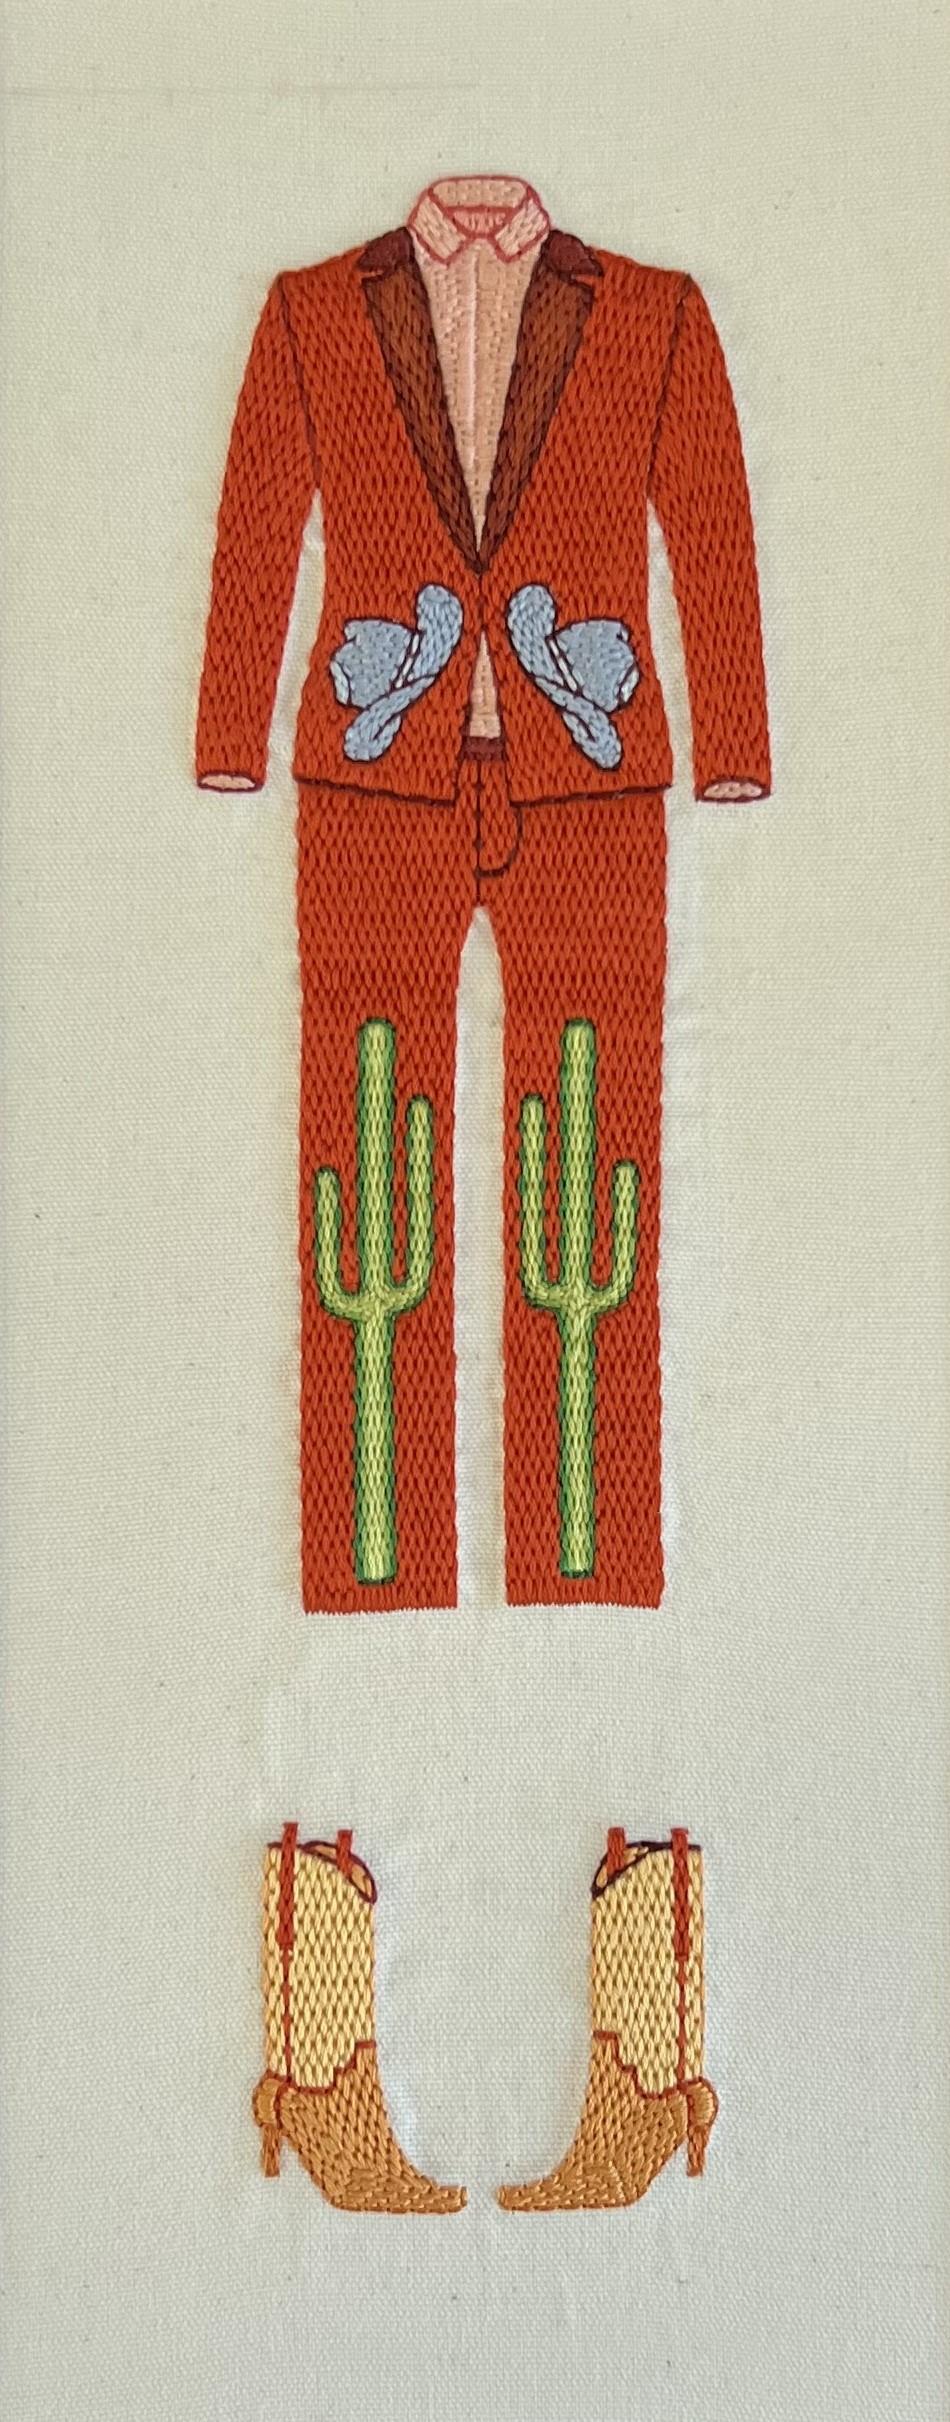 Hats + Cacti Suit - Art by Jane Reichle